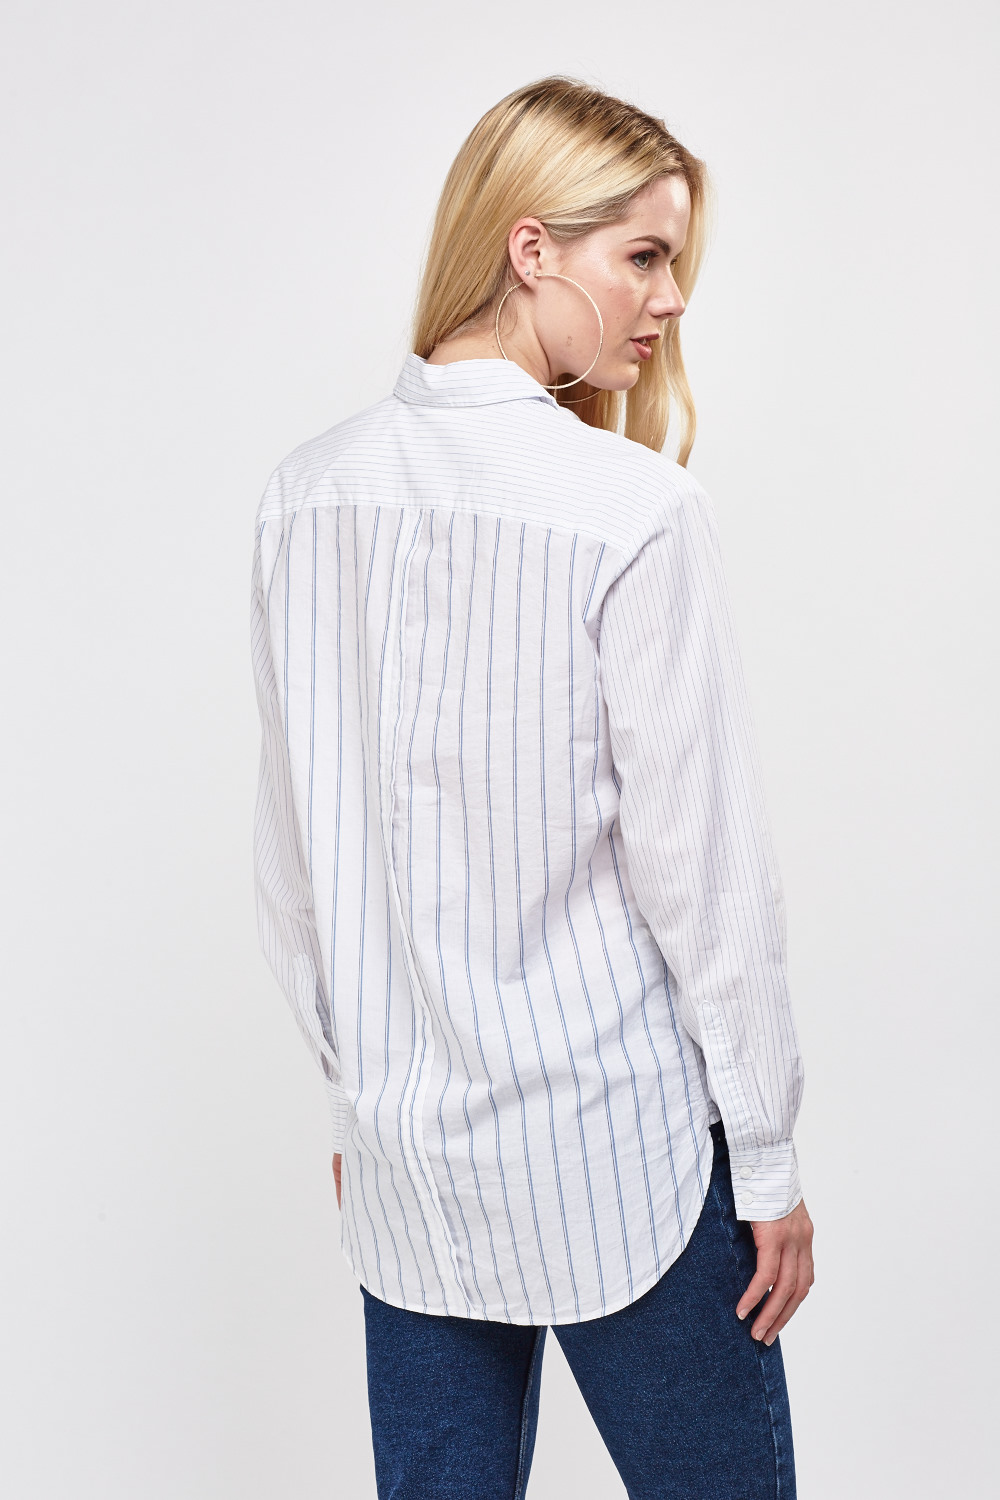 Long Sleeve Stripe Shirt - Just $3